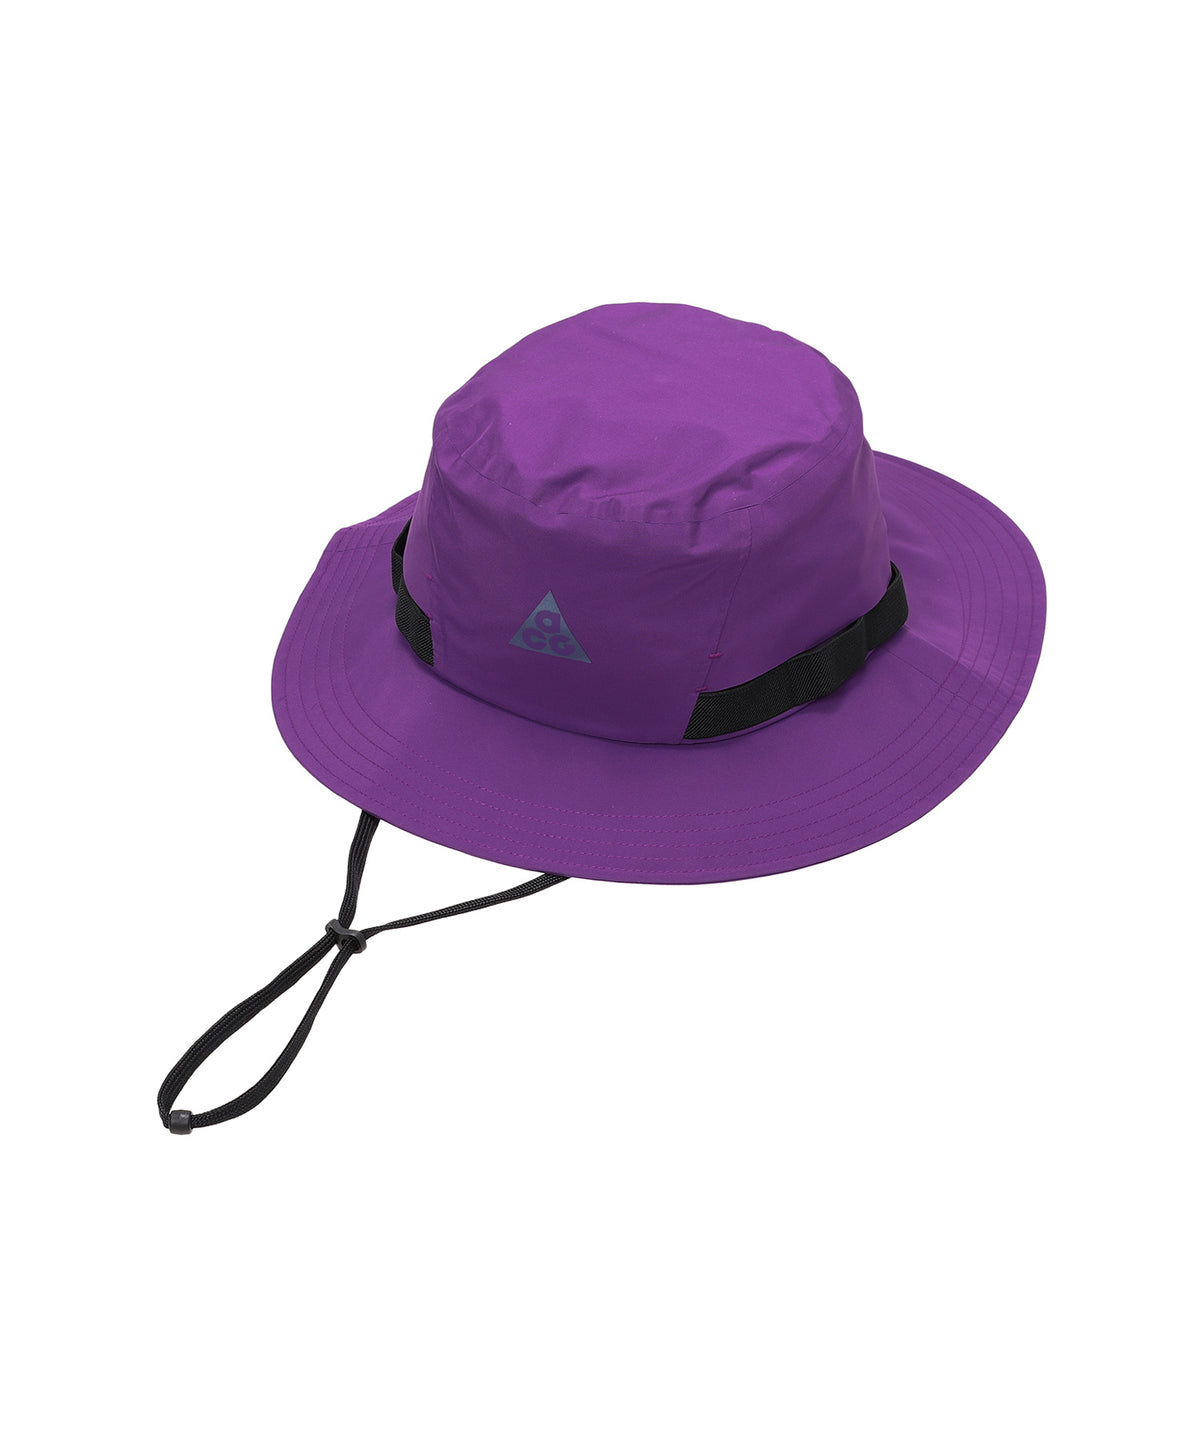 ACG Apex Wb Bucket Hat